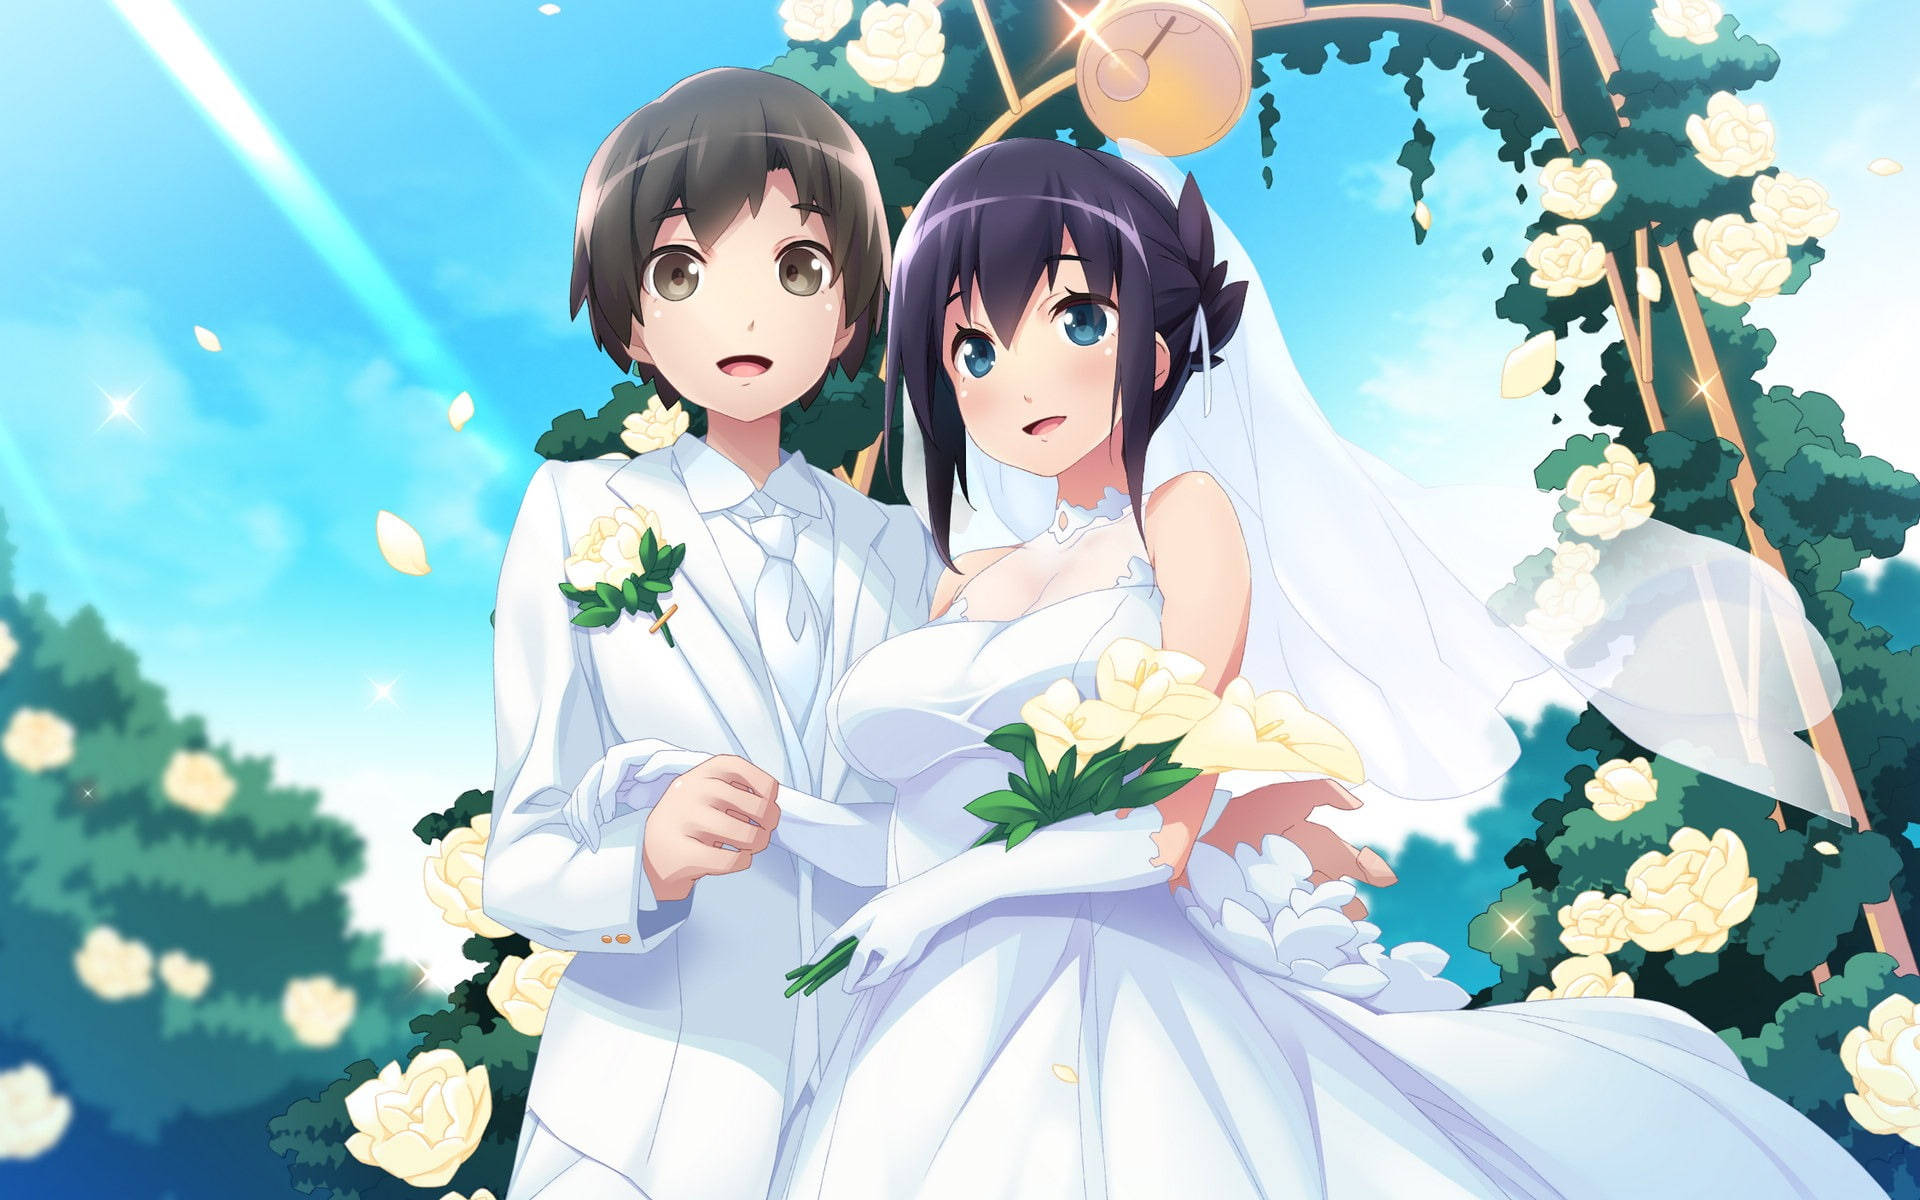 Anime Girl Wedding Dress: ilustrações stock 2206156403 | Shutterstock-demhanvico.com.vn